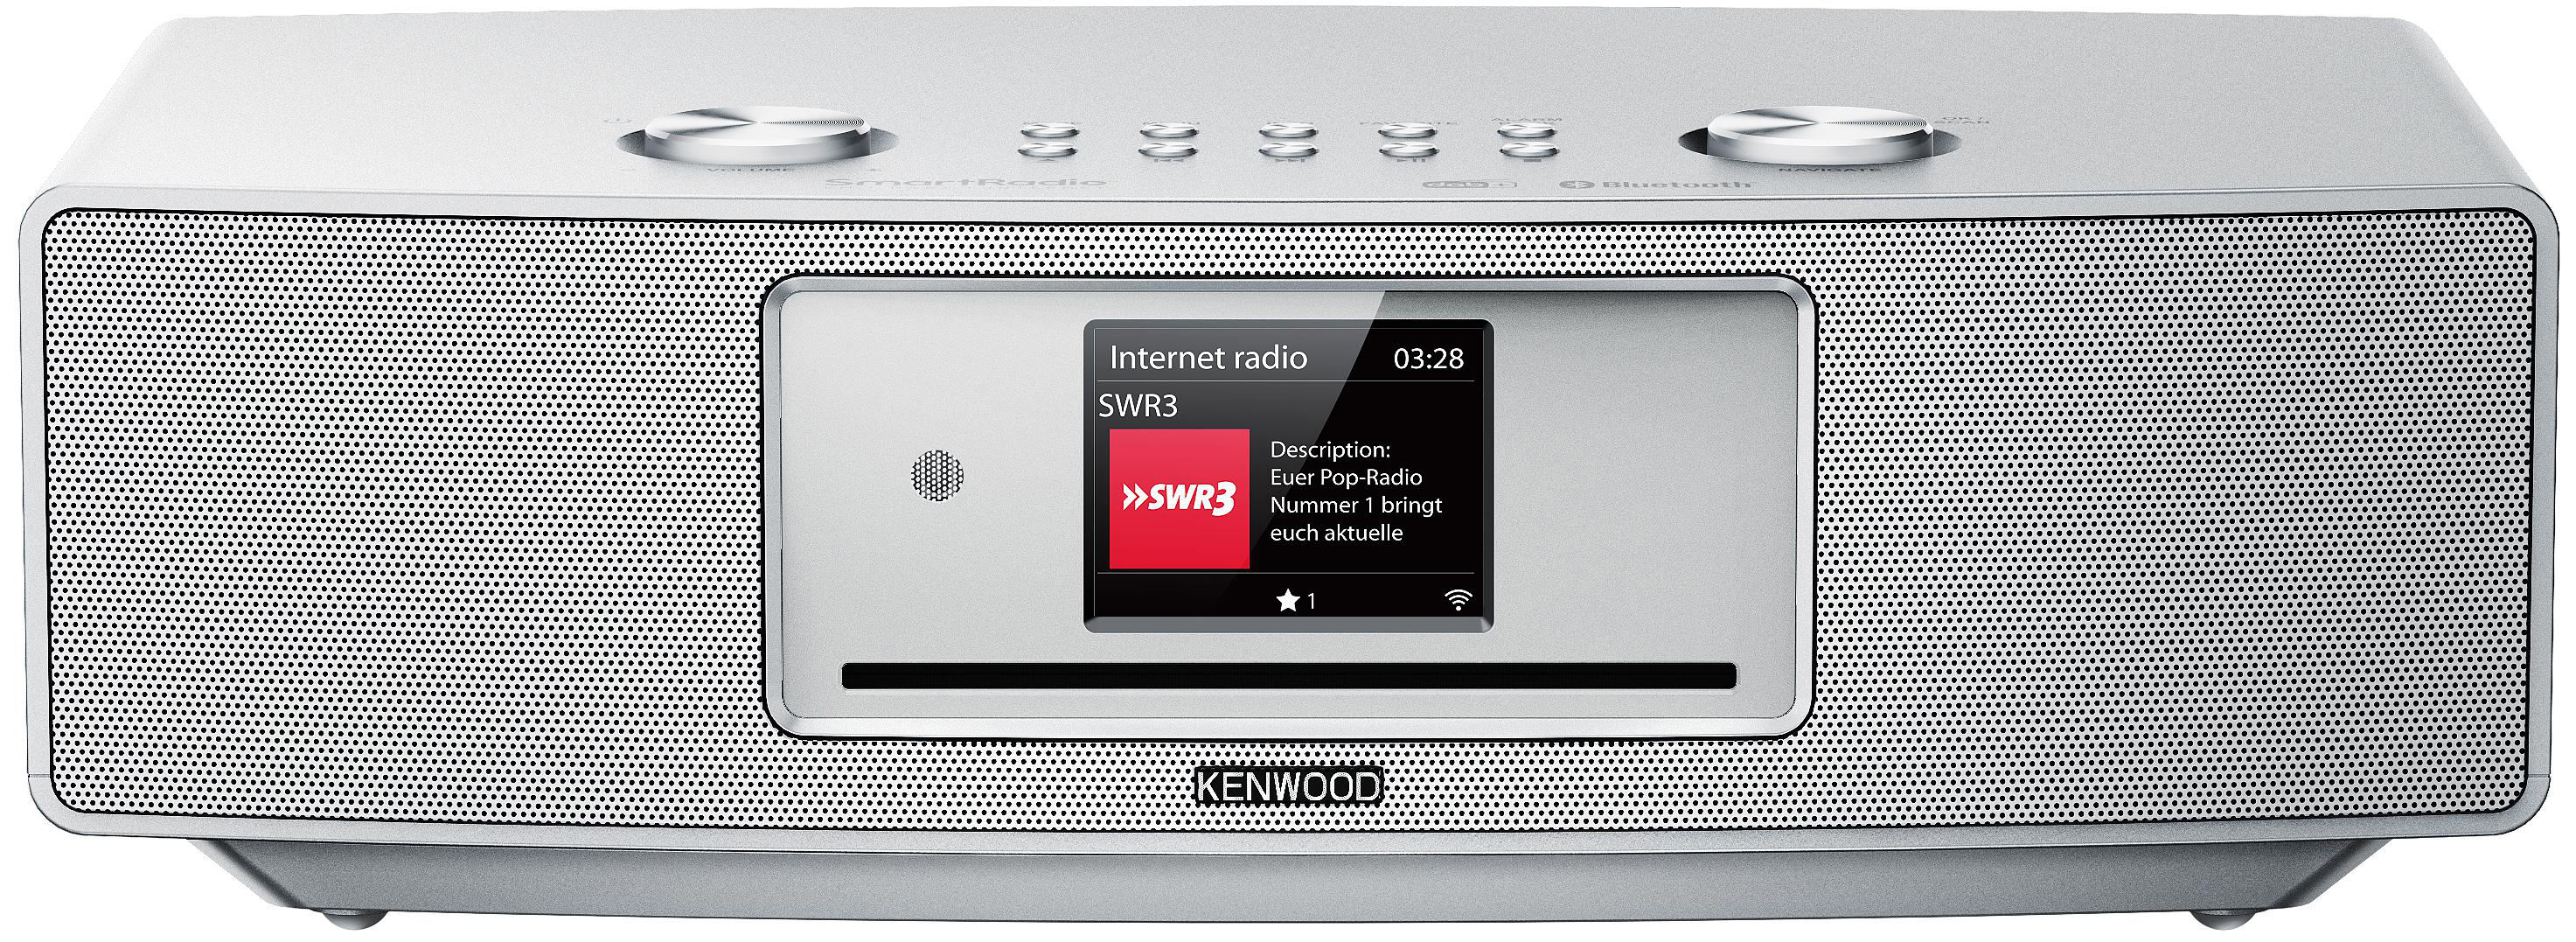 KENWOOD CR-ST700SCD-S (Silber) Smartradio